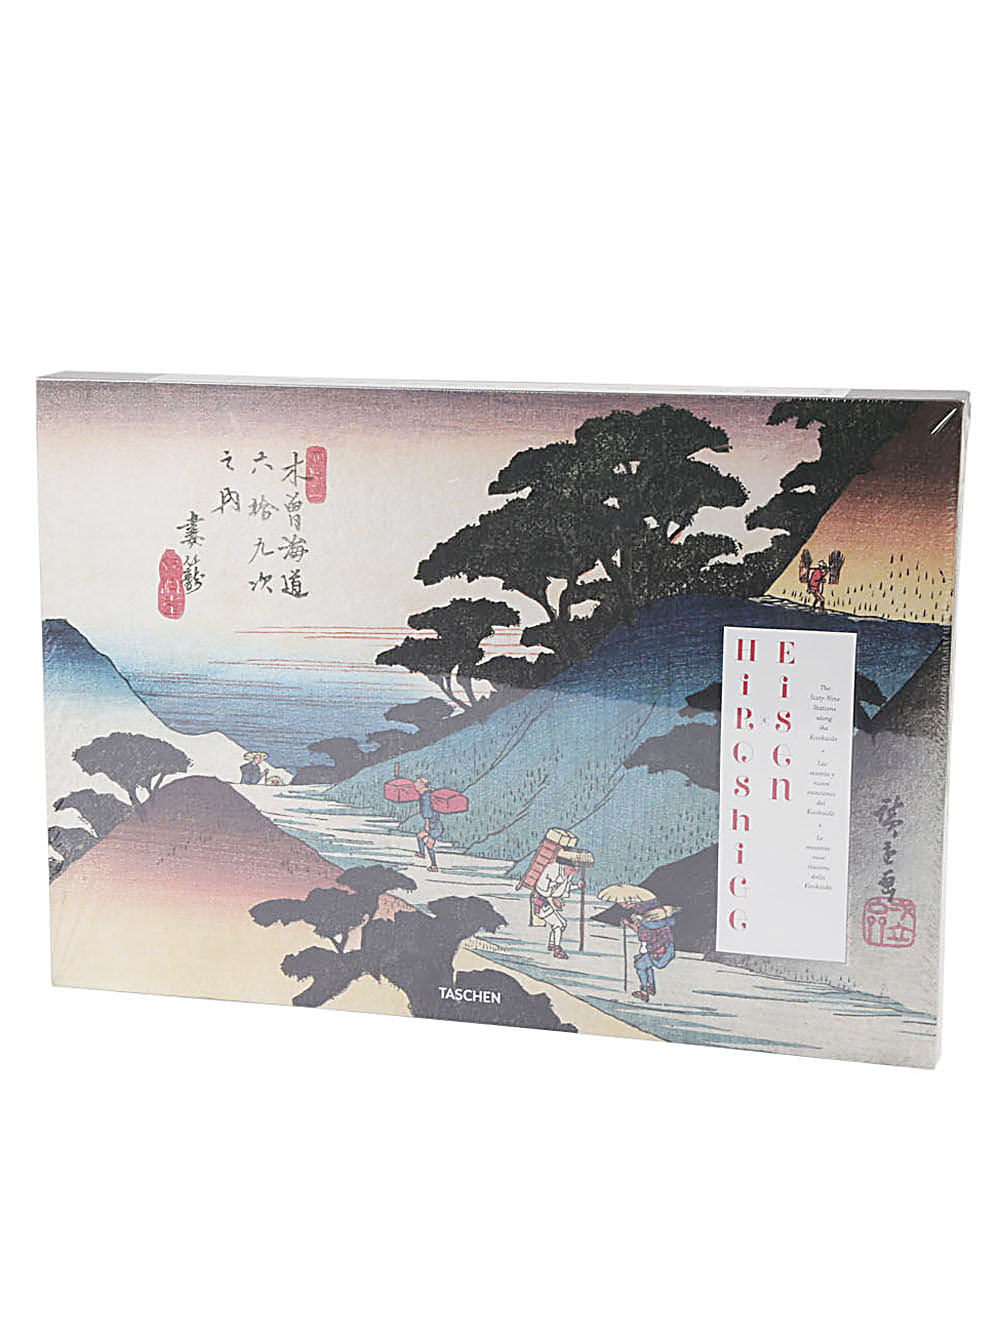 Taschen TASCHEN- Hiroshige & Eisen. The Sixty-nine Stations Along The Kisokaido